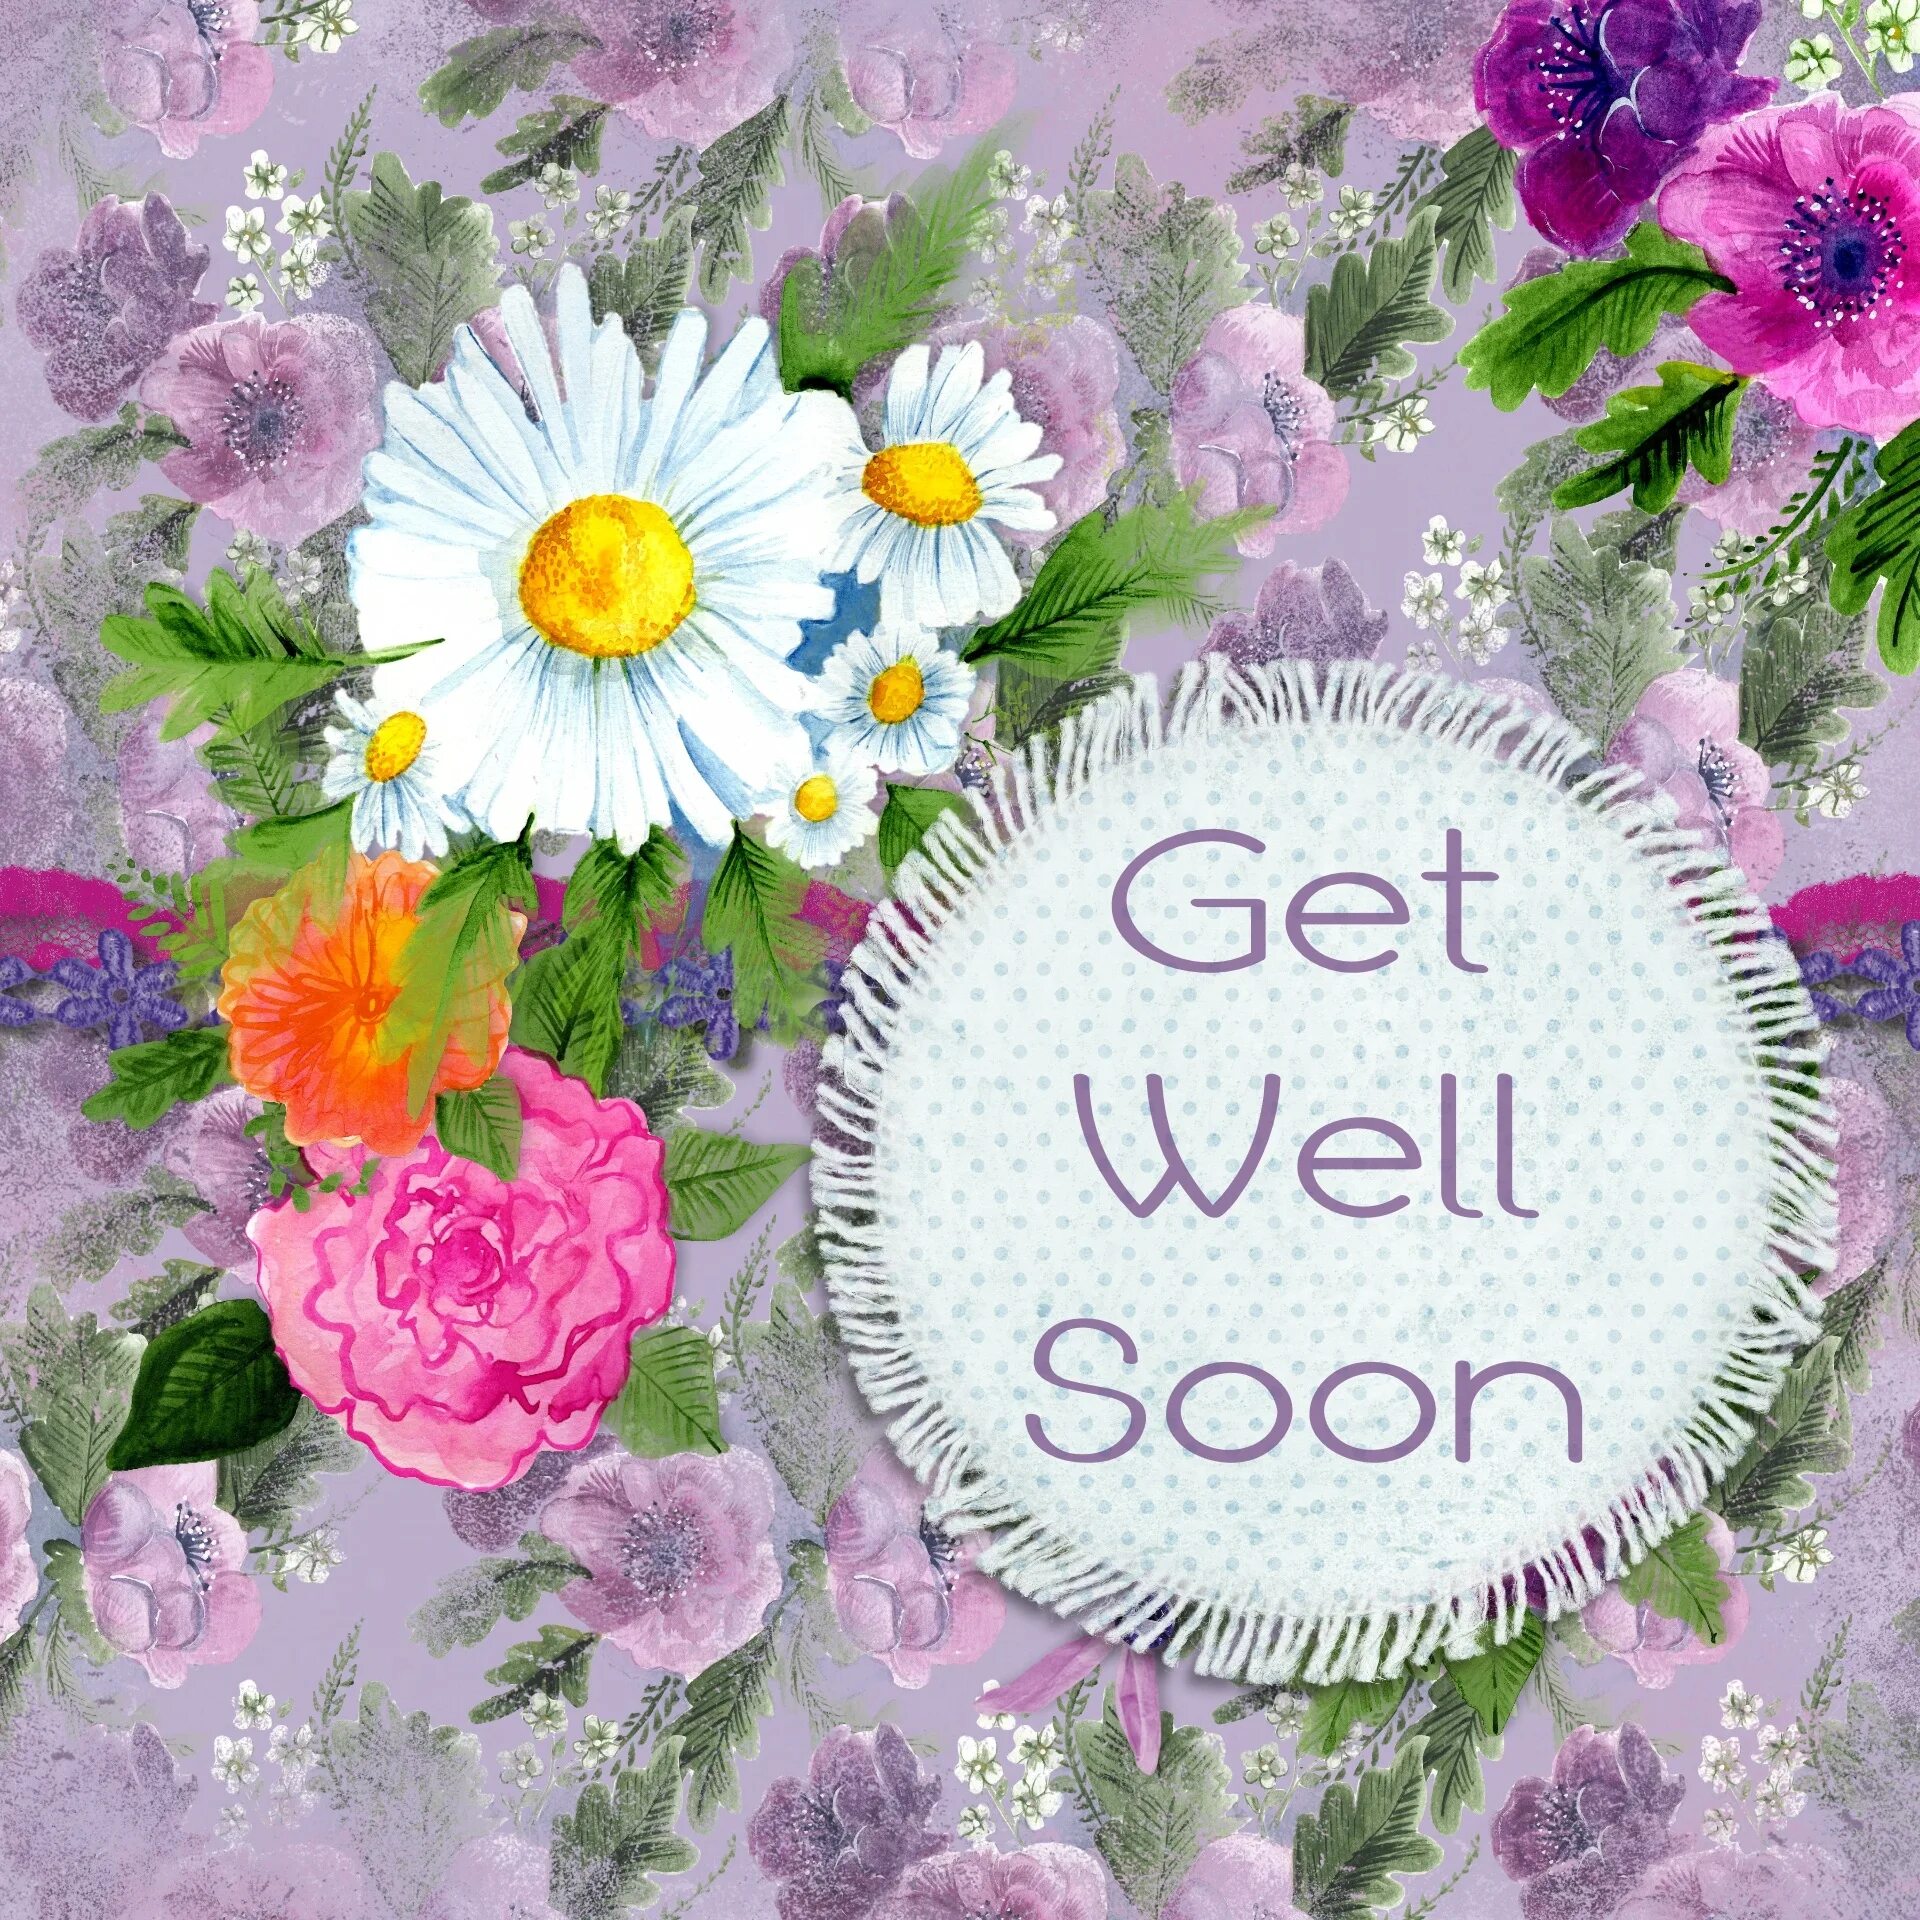 Get well run. Get well soon. Get well открытка. Get well soon картинки. Выздоравливай на английском.